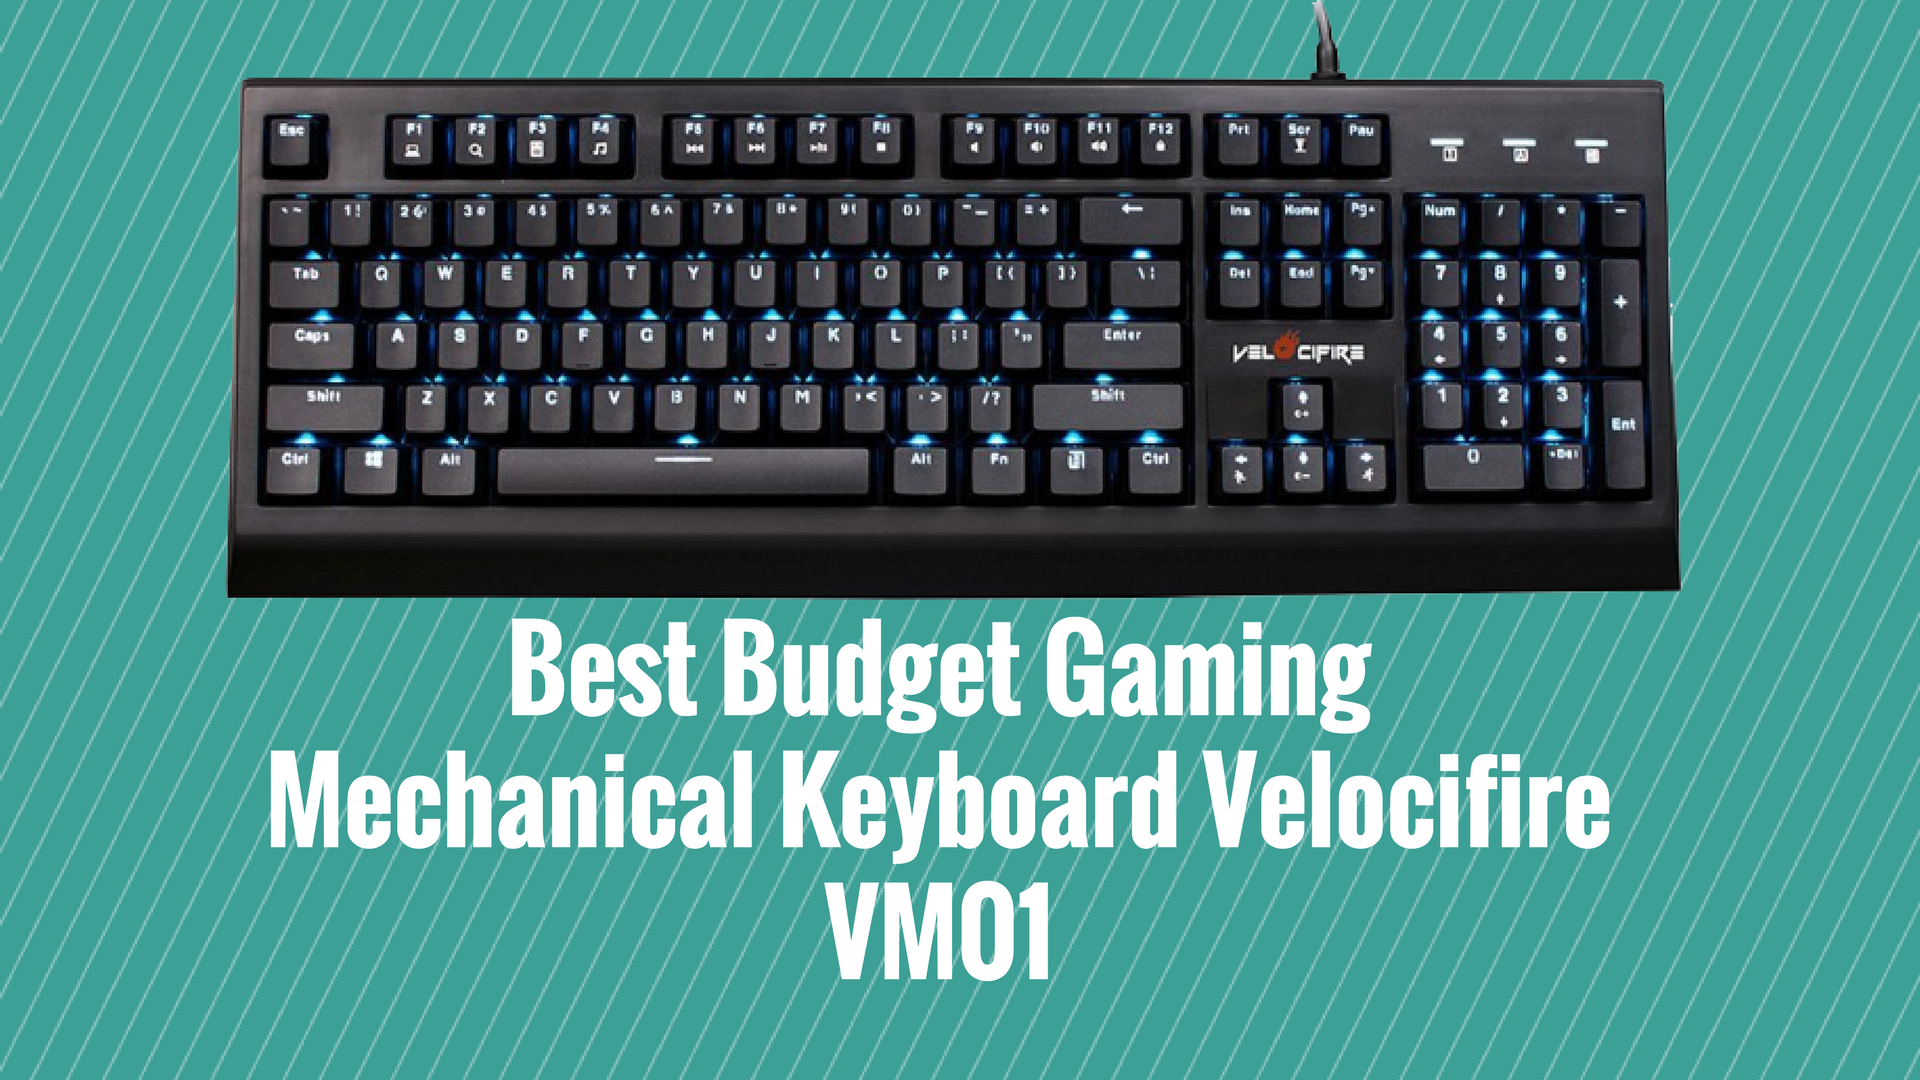 Best Budget Gaming Mechanical Keyboard Velocifire VM01